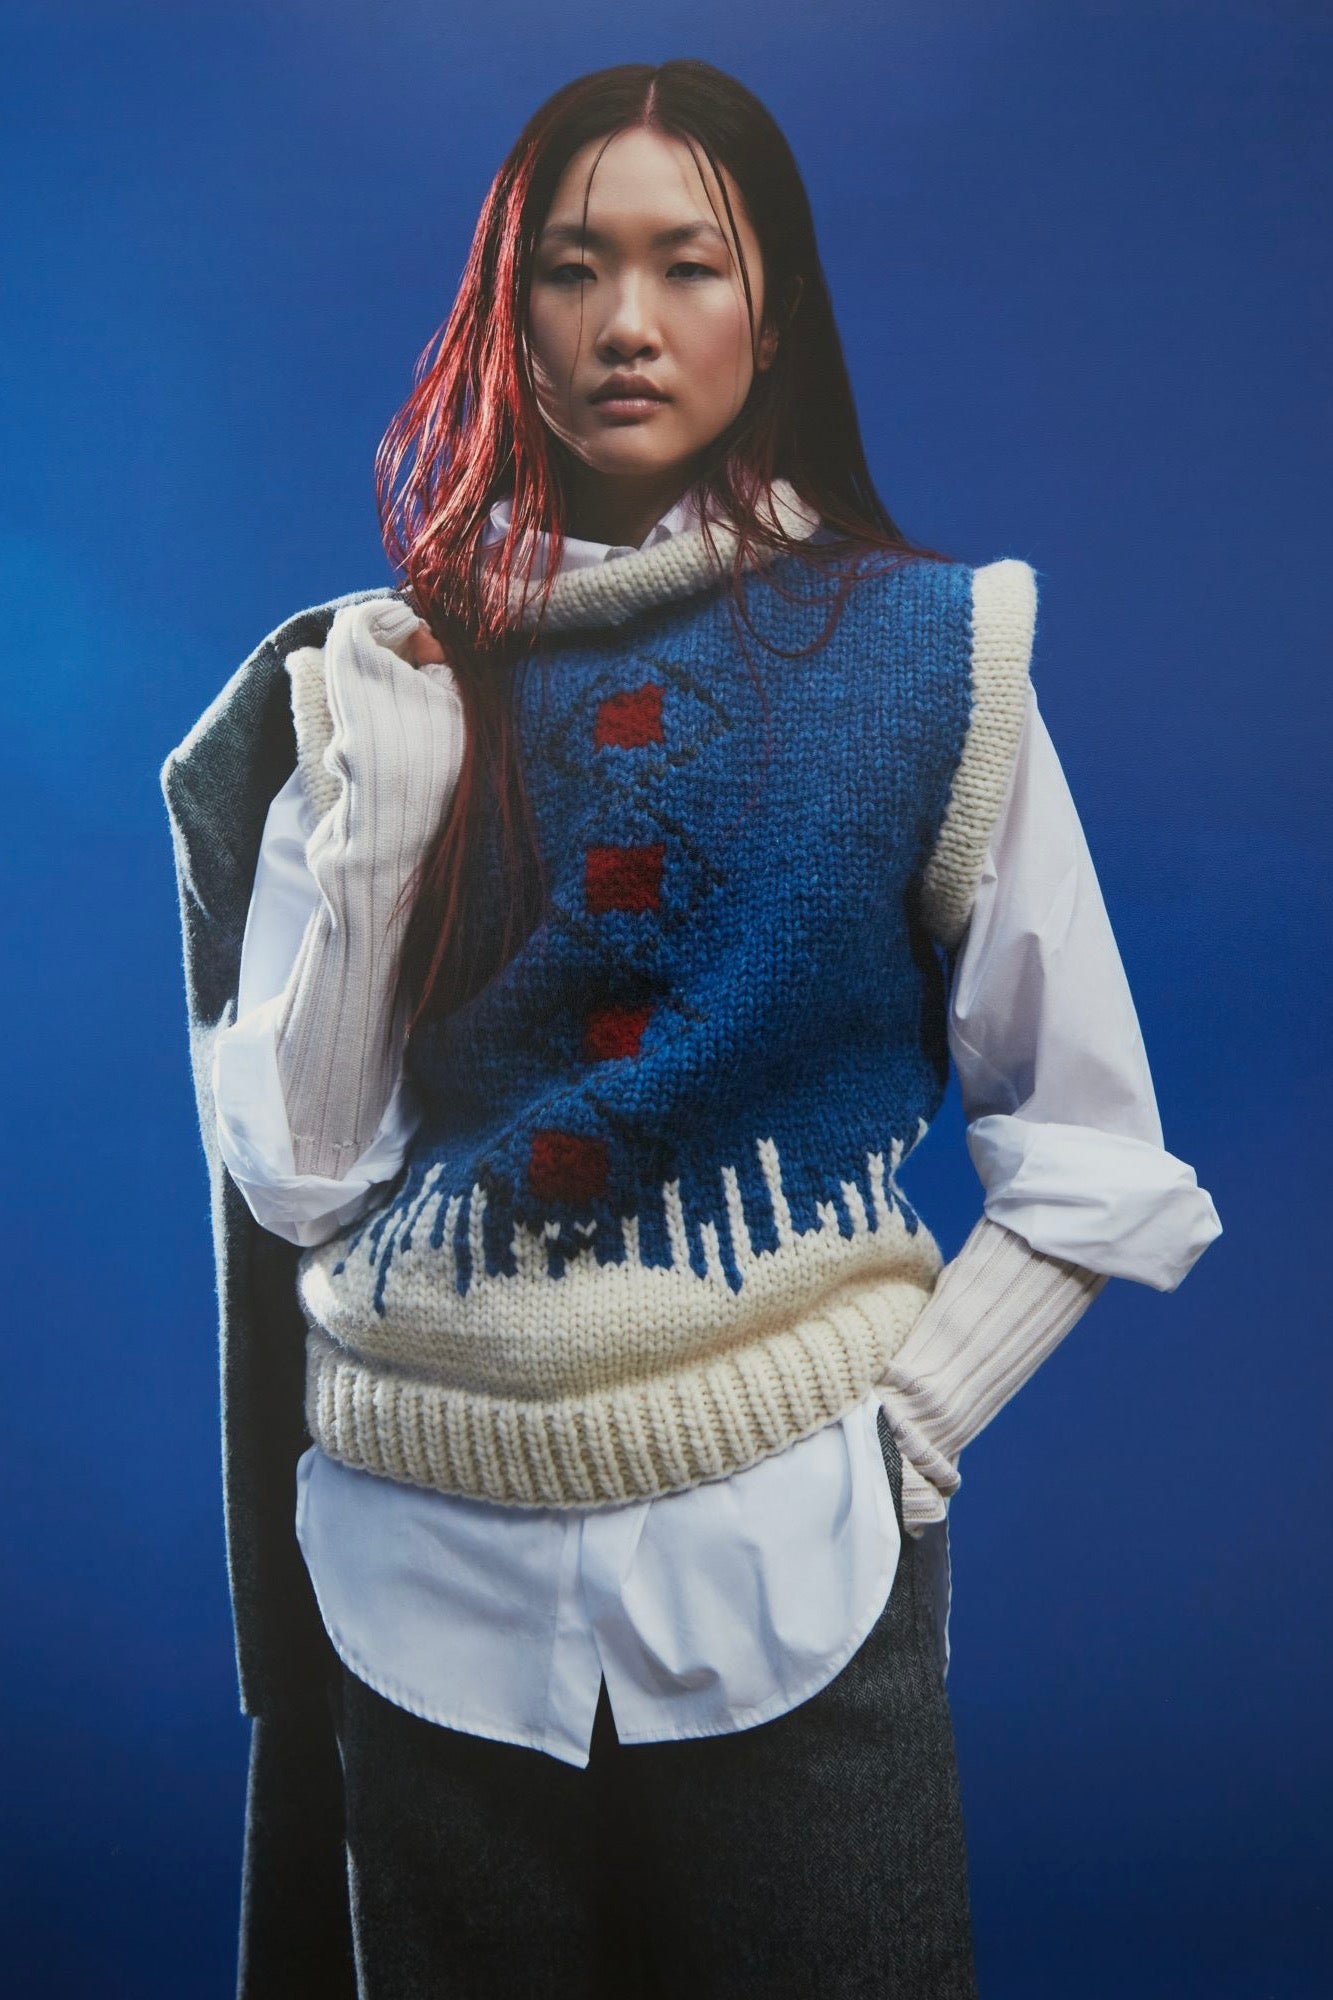 Le Cavalier - Kanata Pullover Knit: Blue & Red